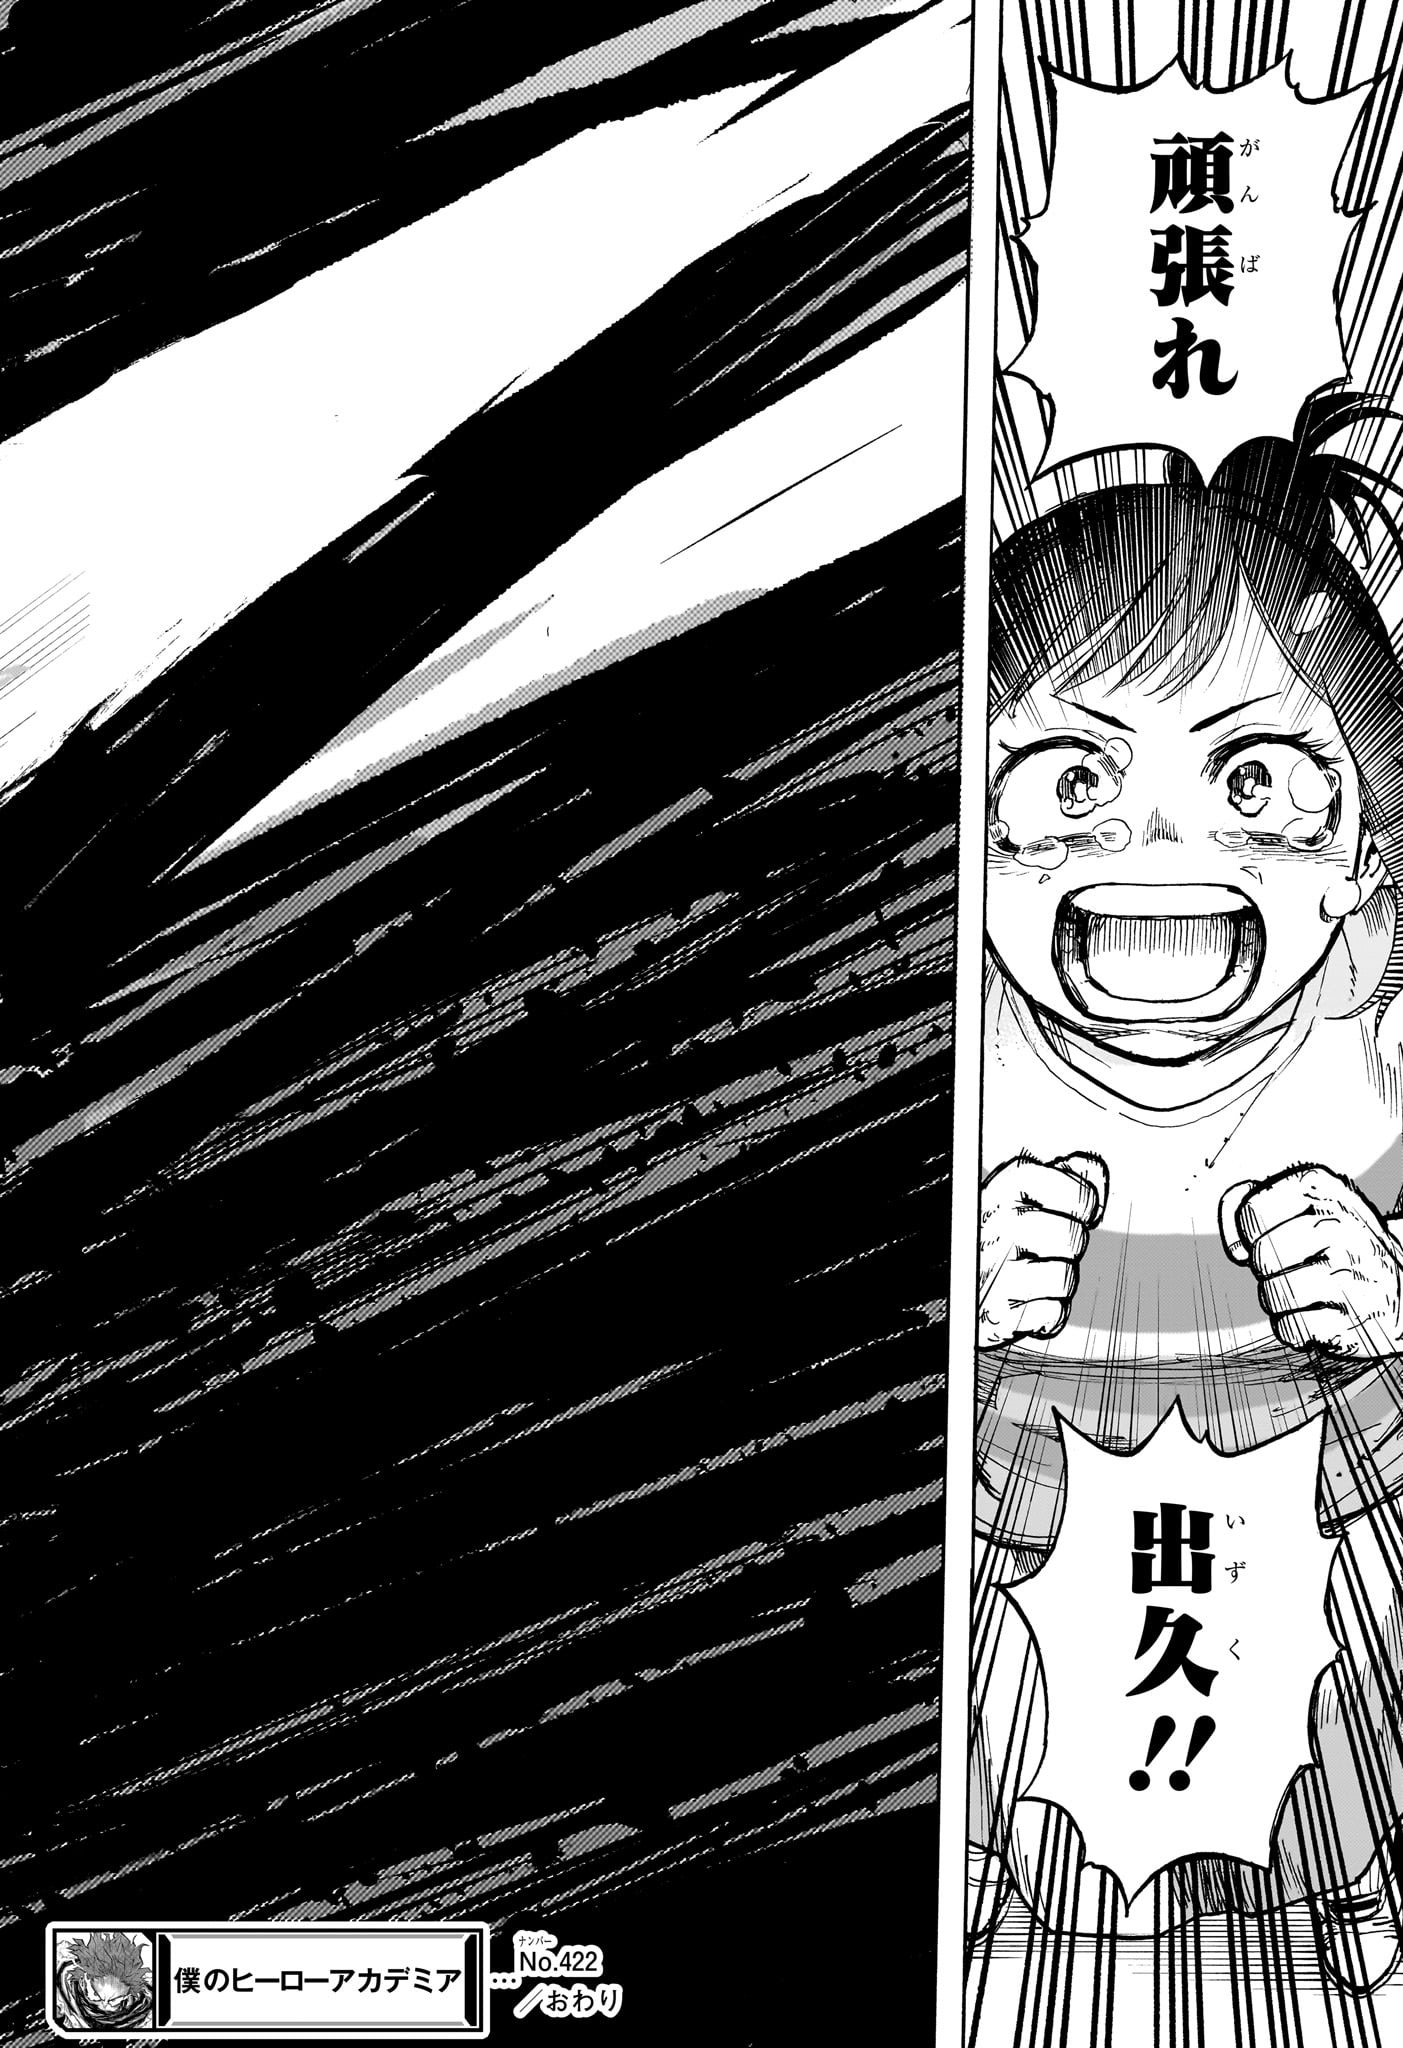 Boku no Hero Academia - Chapter 422 - Page 14